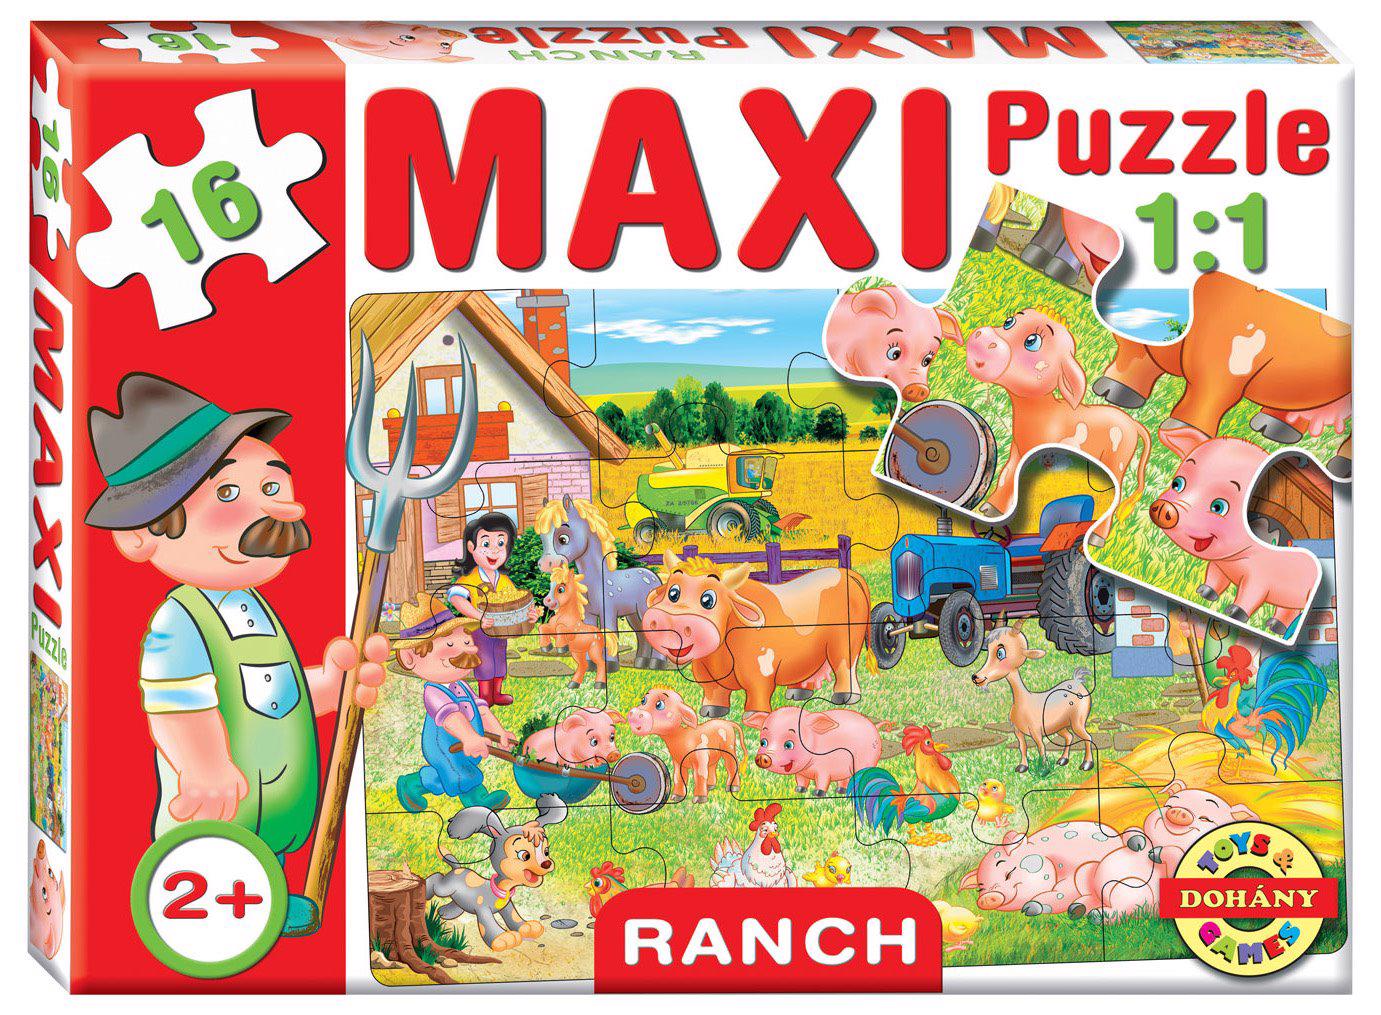 Puzzle Gazdaság 16 darab maxi